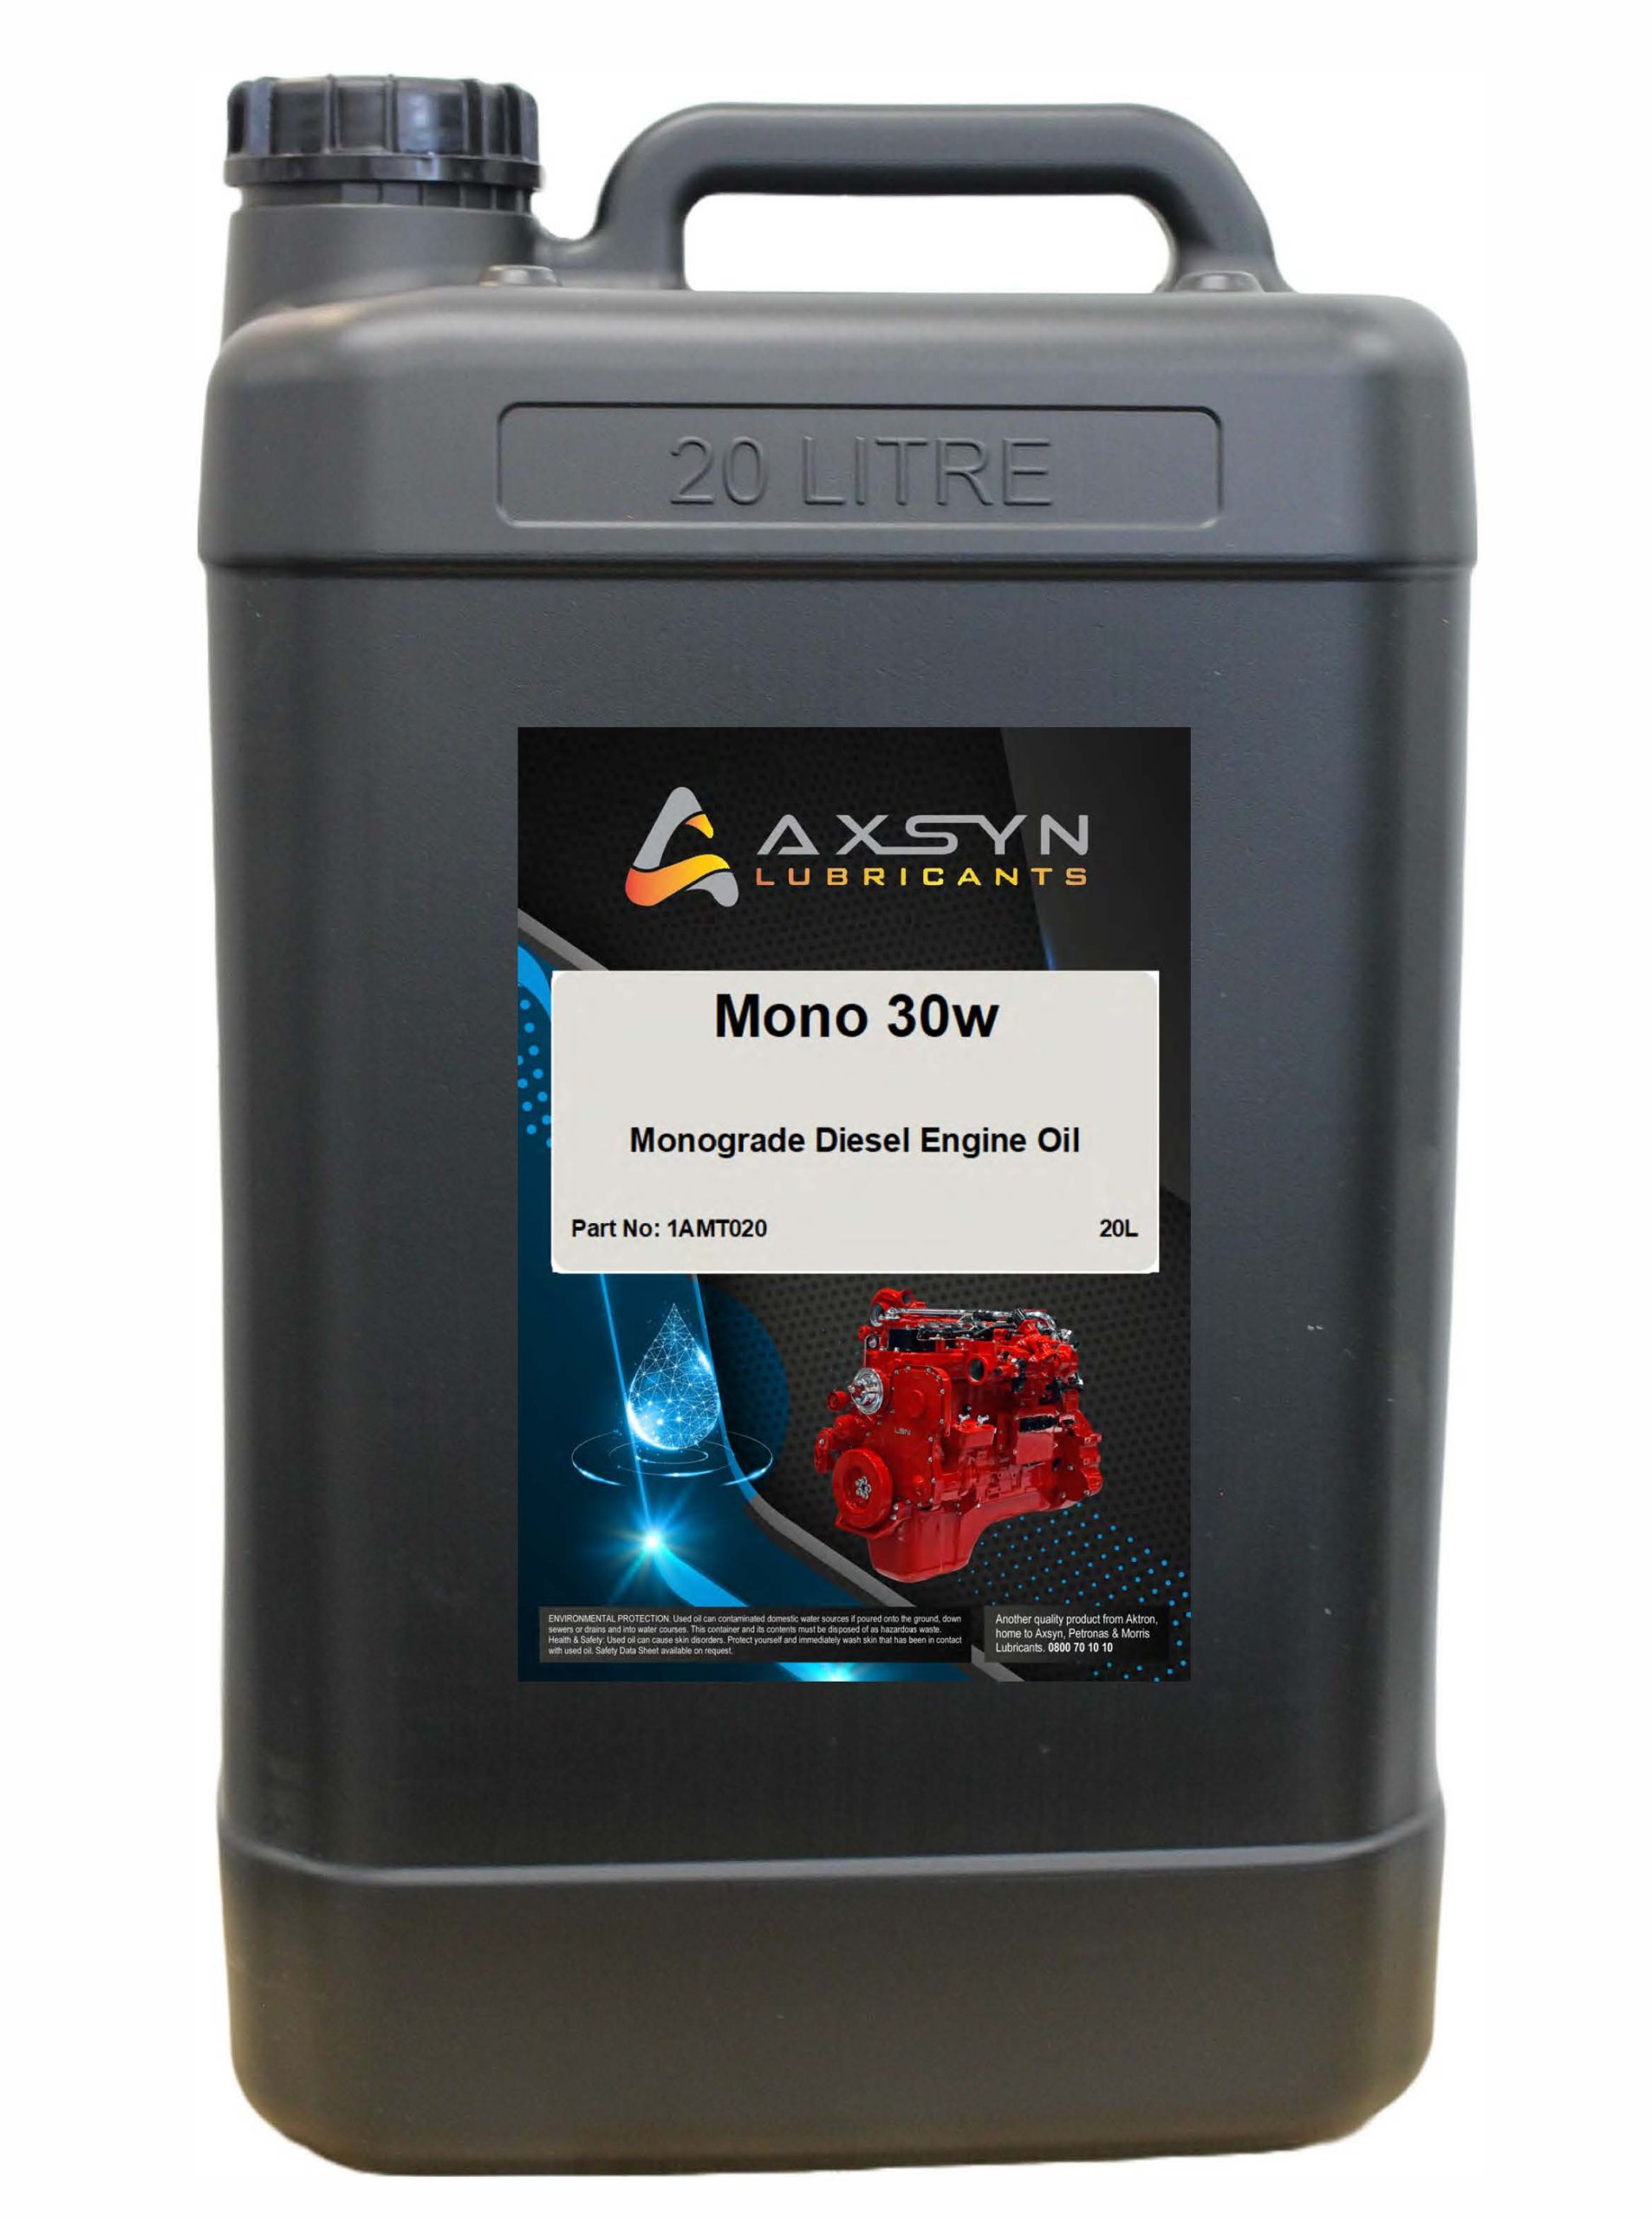 Axsyn Mono 30w